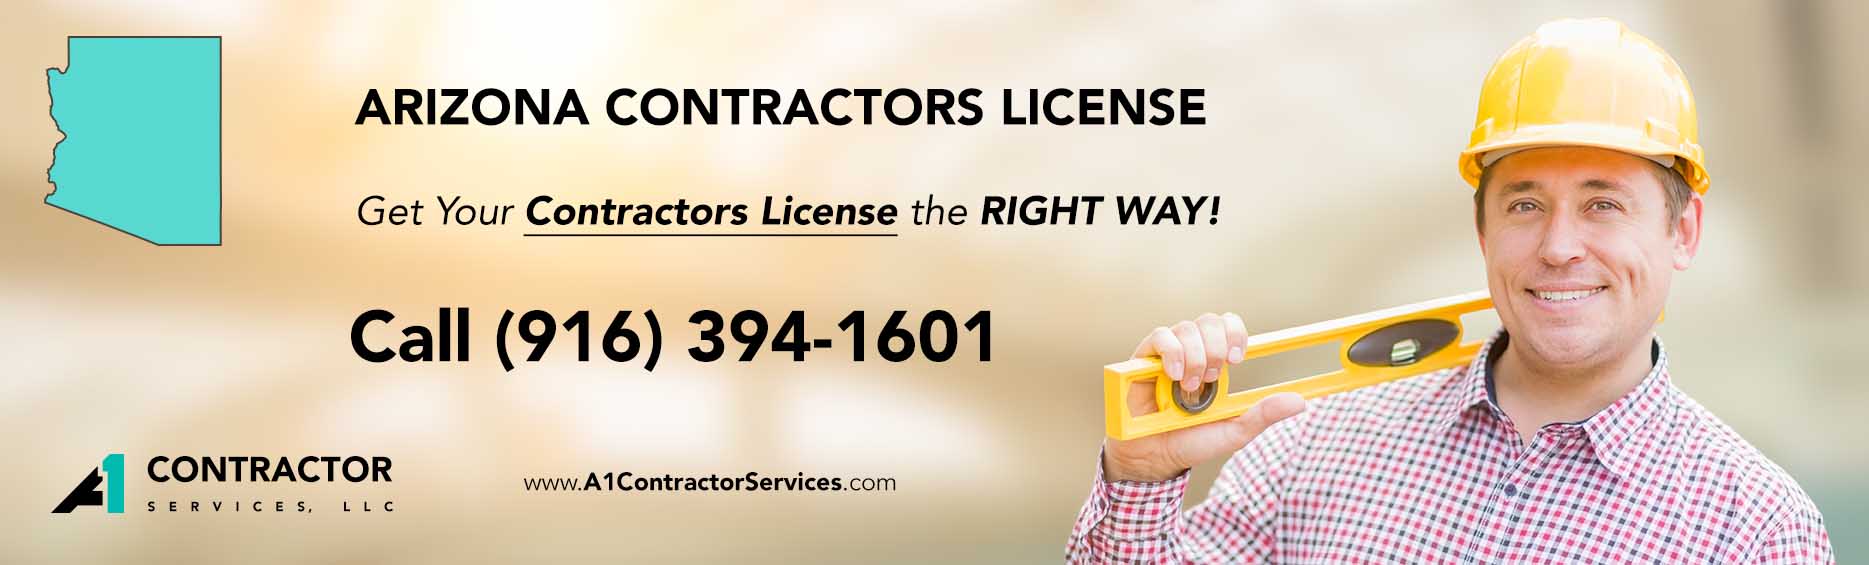 Arizona Contractors License